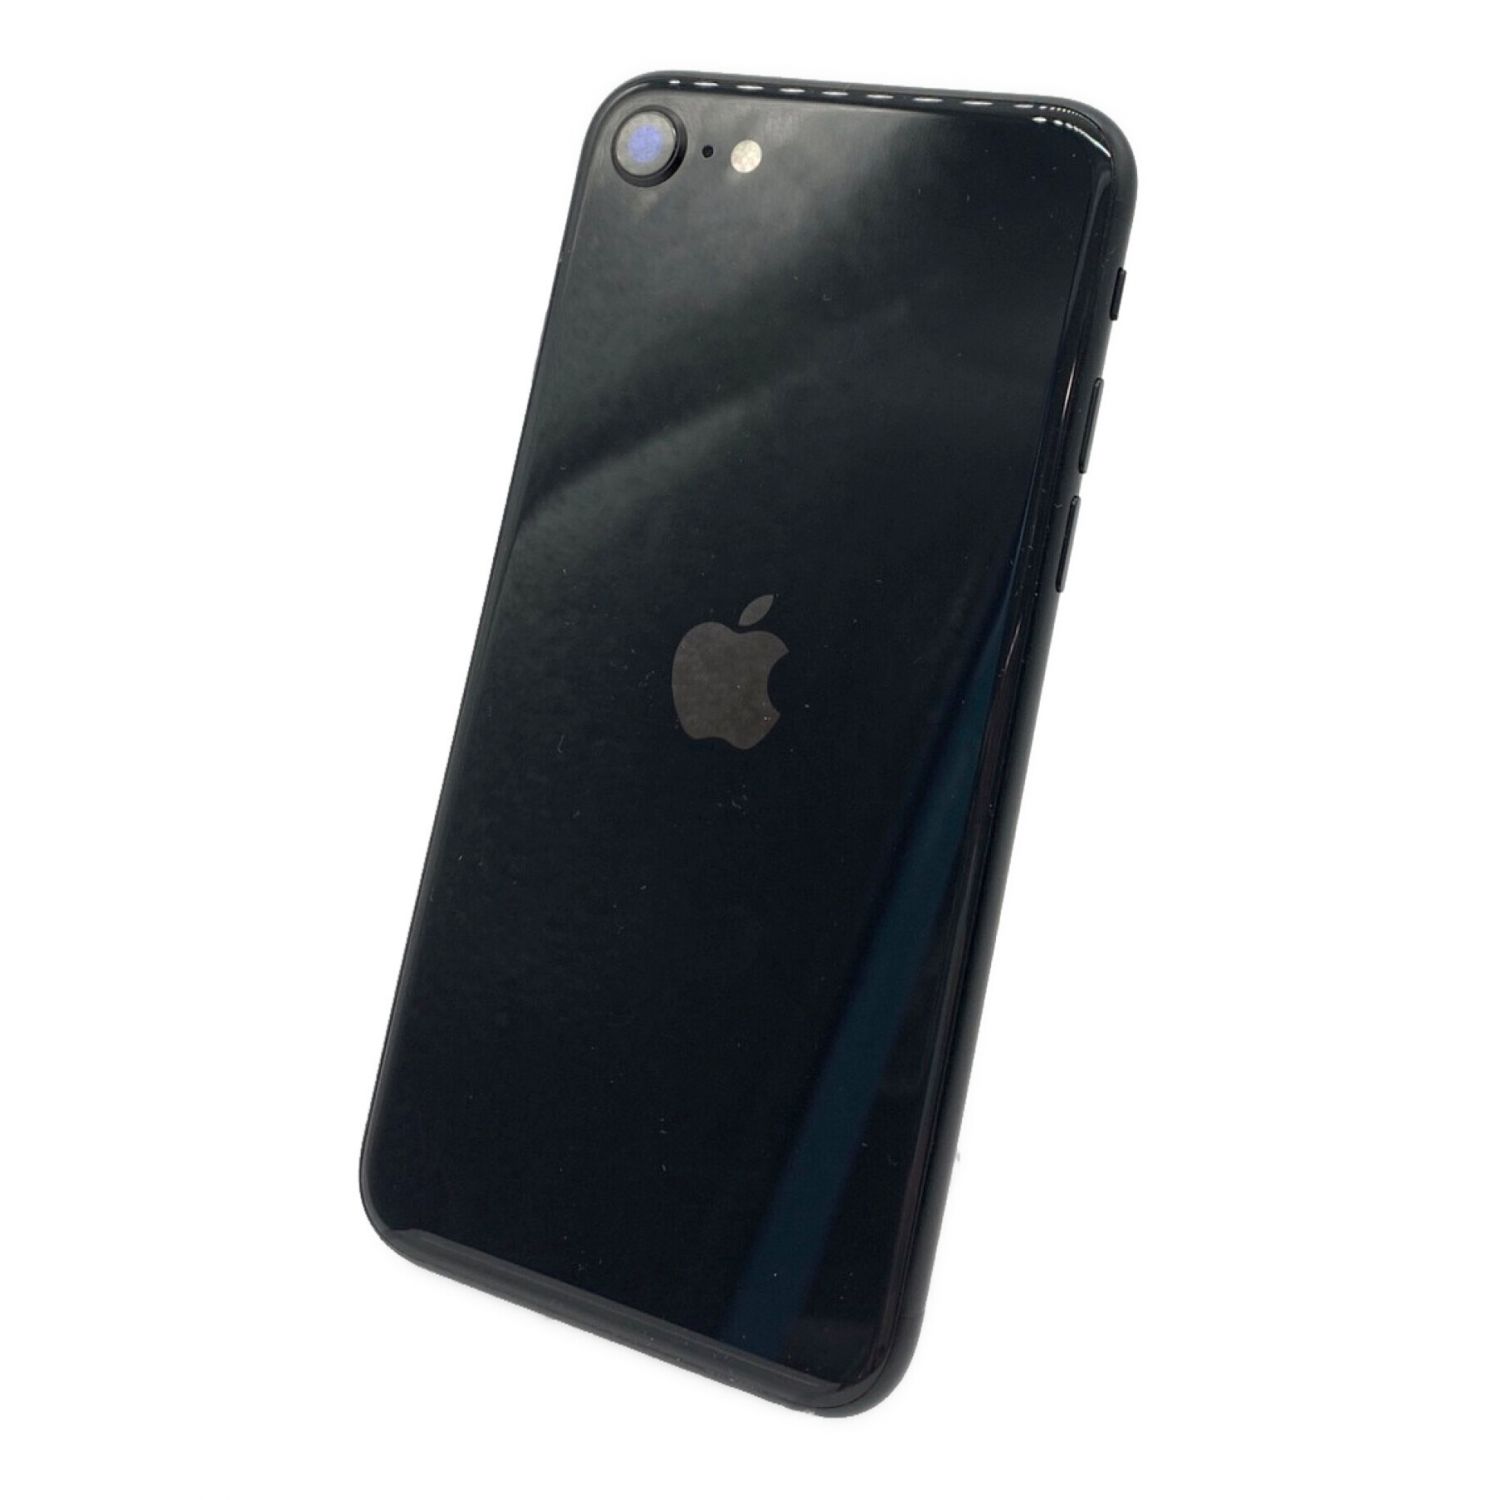 Apple (アップル) iPhone SE(第2世代) MHGP3J/A au 64GB iOS バッテリー:Aランク 程度:Aランク